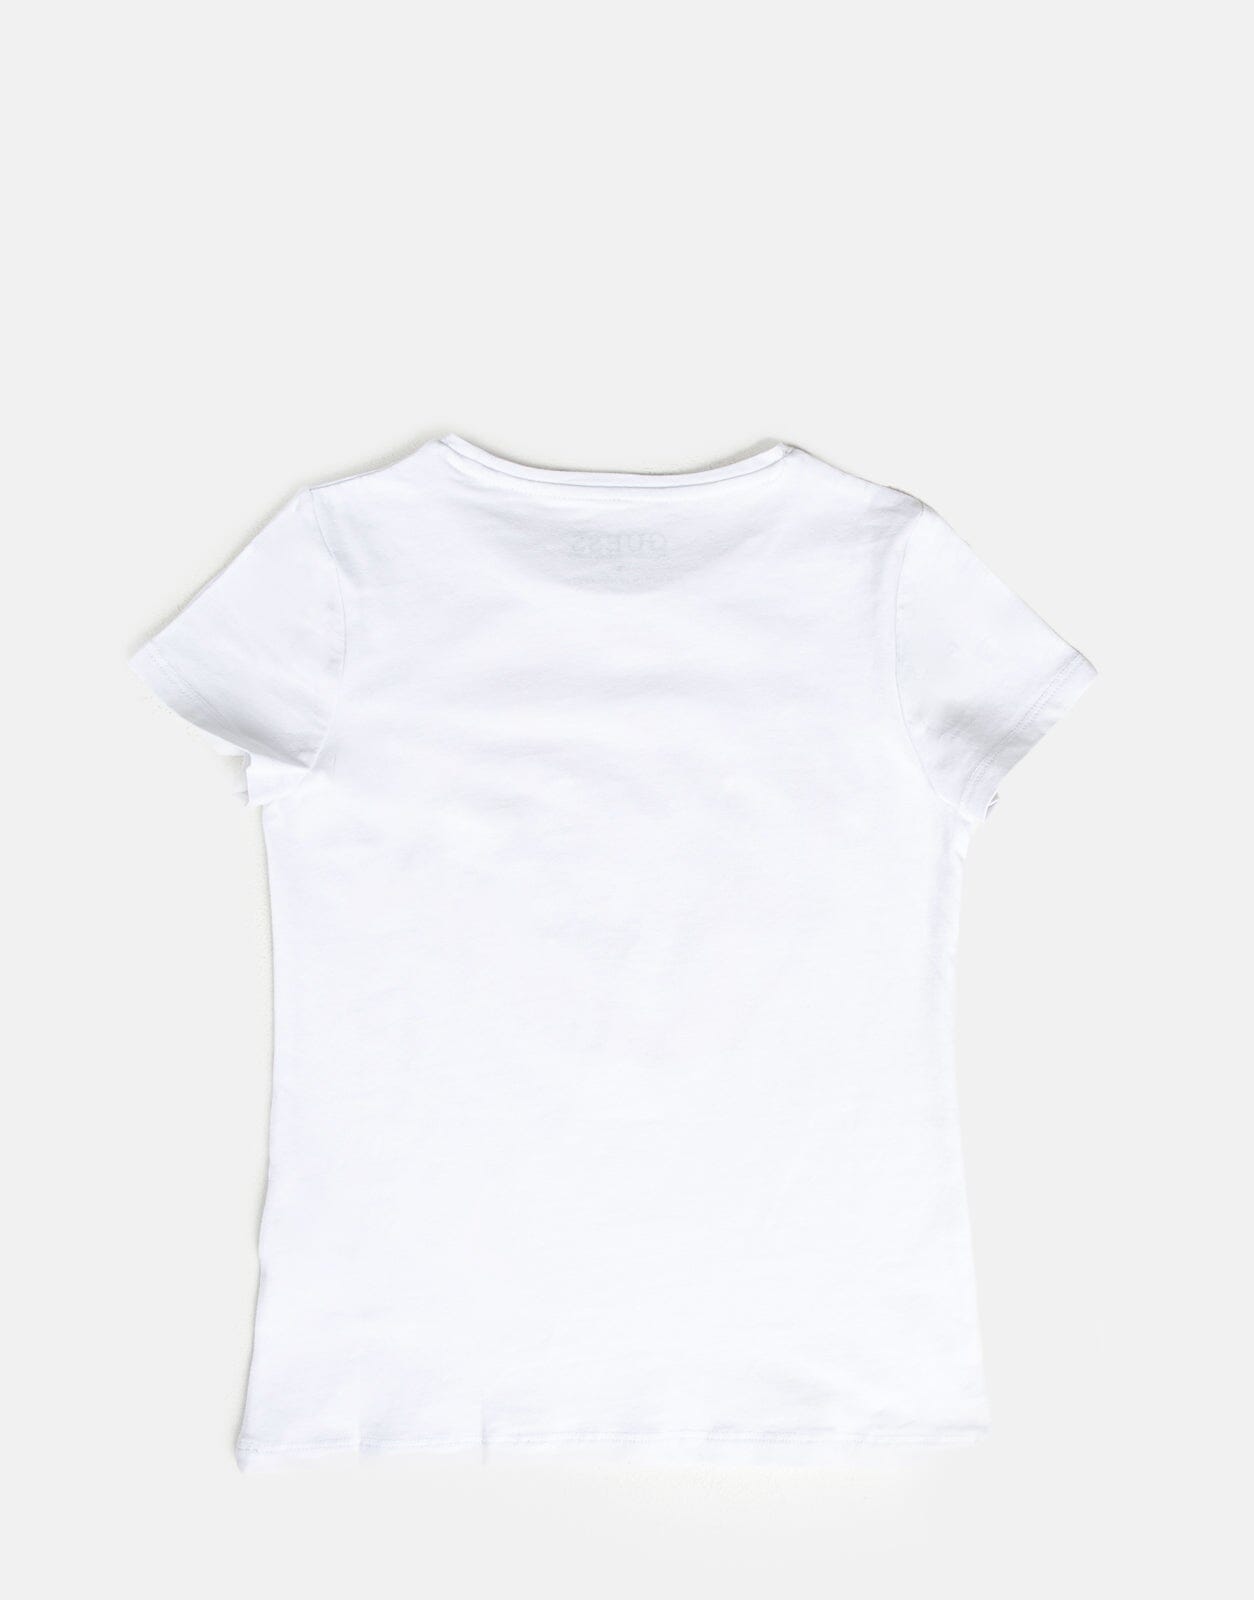 Guess Kids Short Sleeve T-Shirt White - Subwear